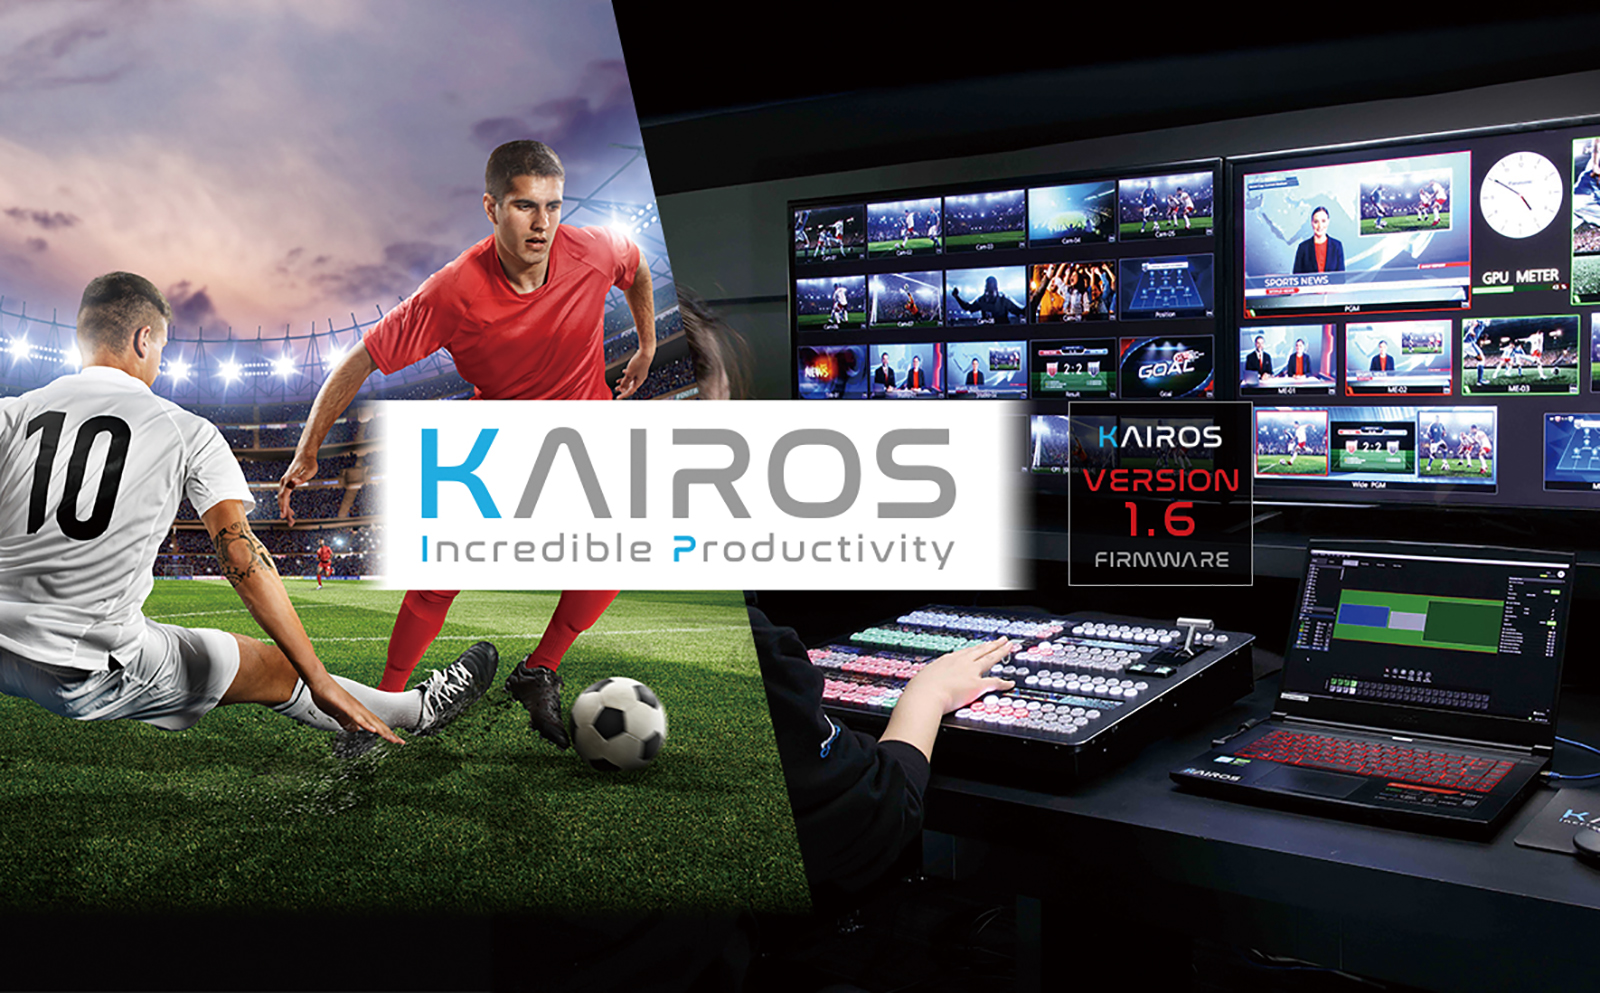 image: KAIROS Incredible Productivity